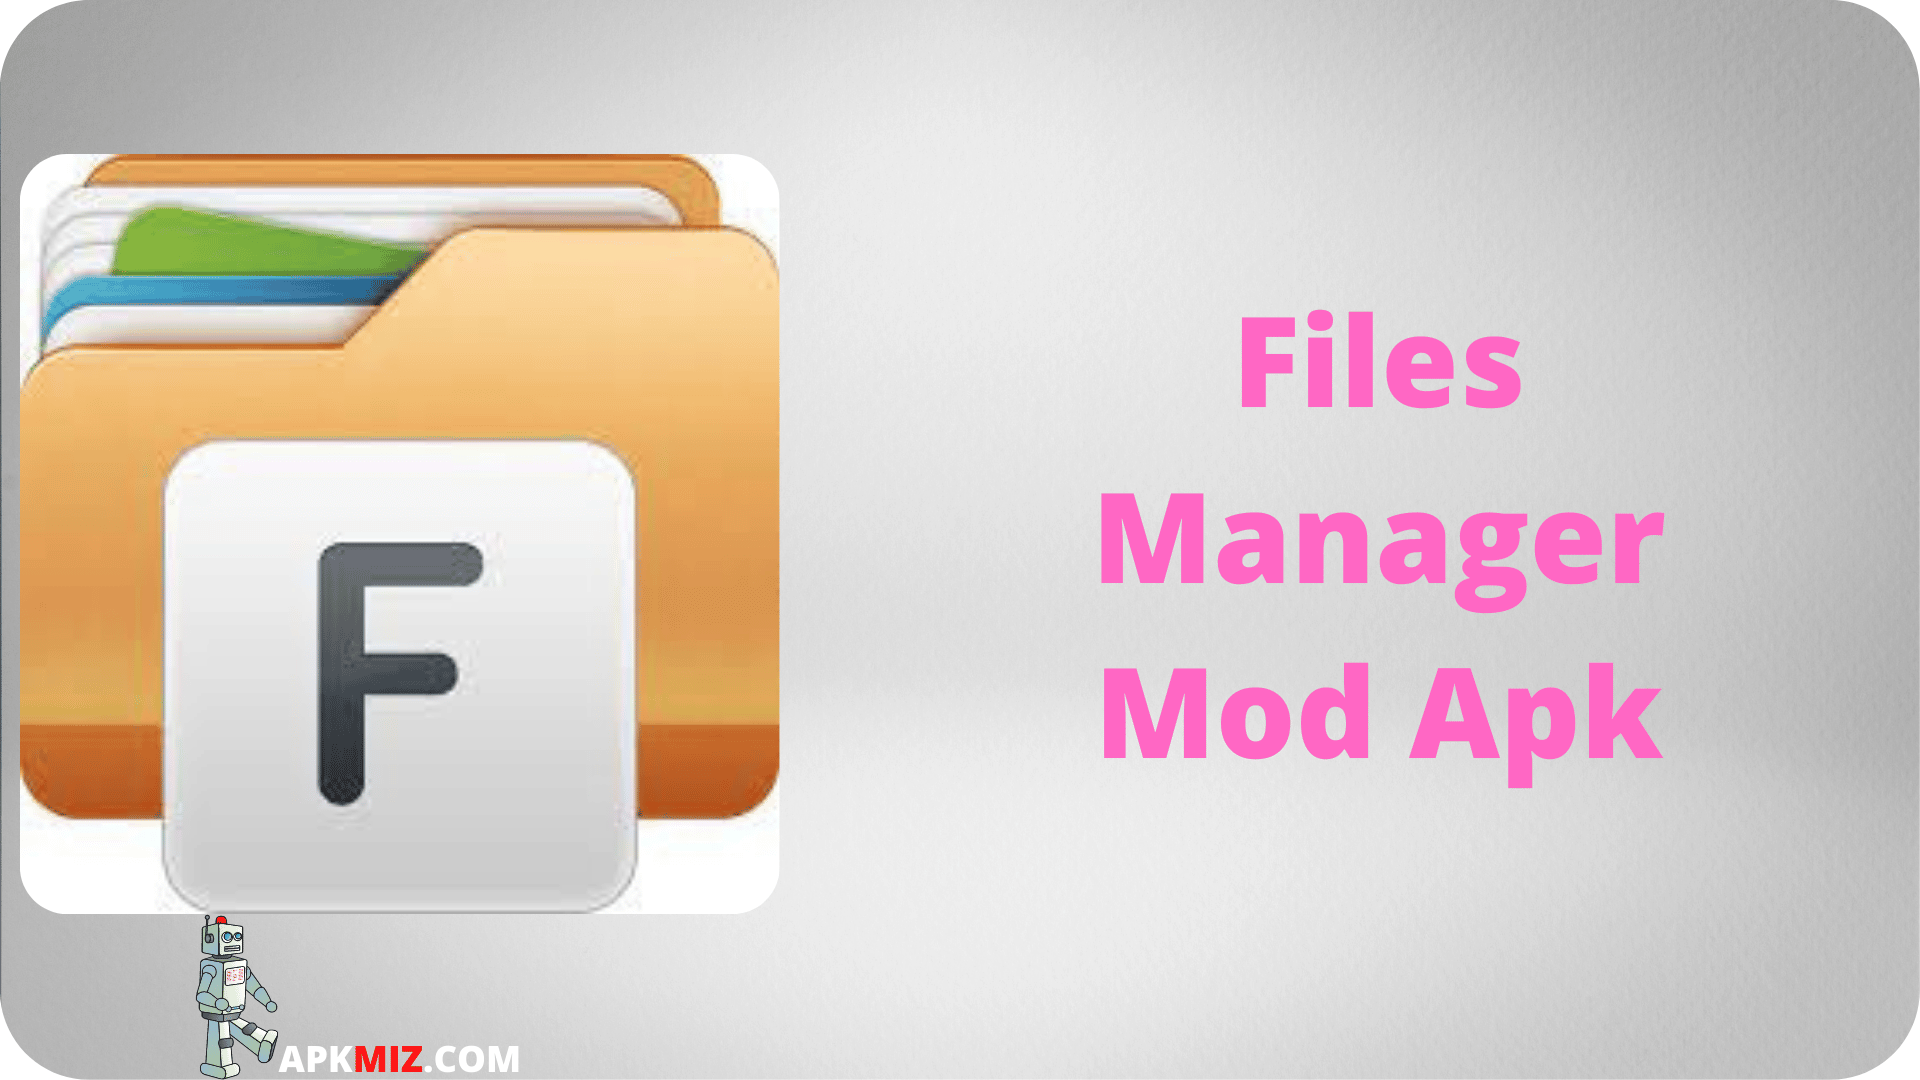 Files Manager Mod Apk